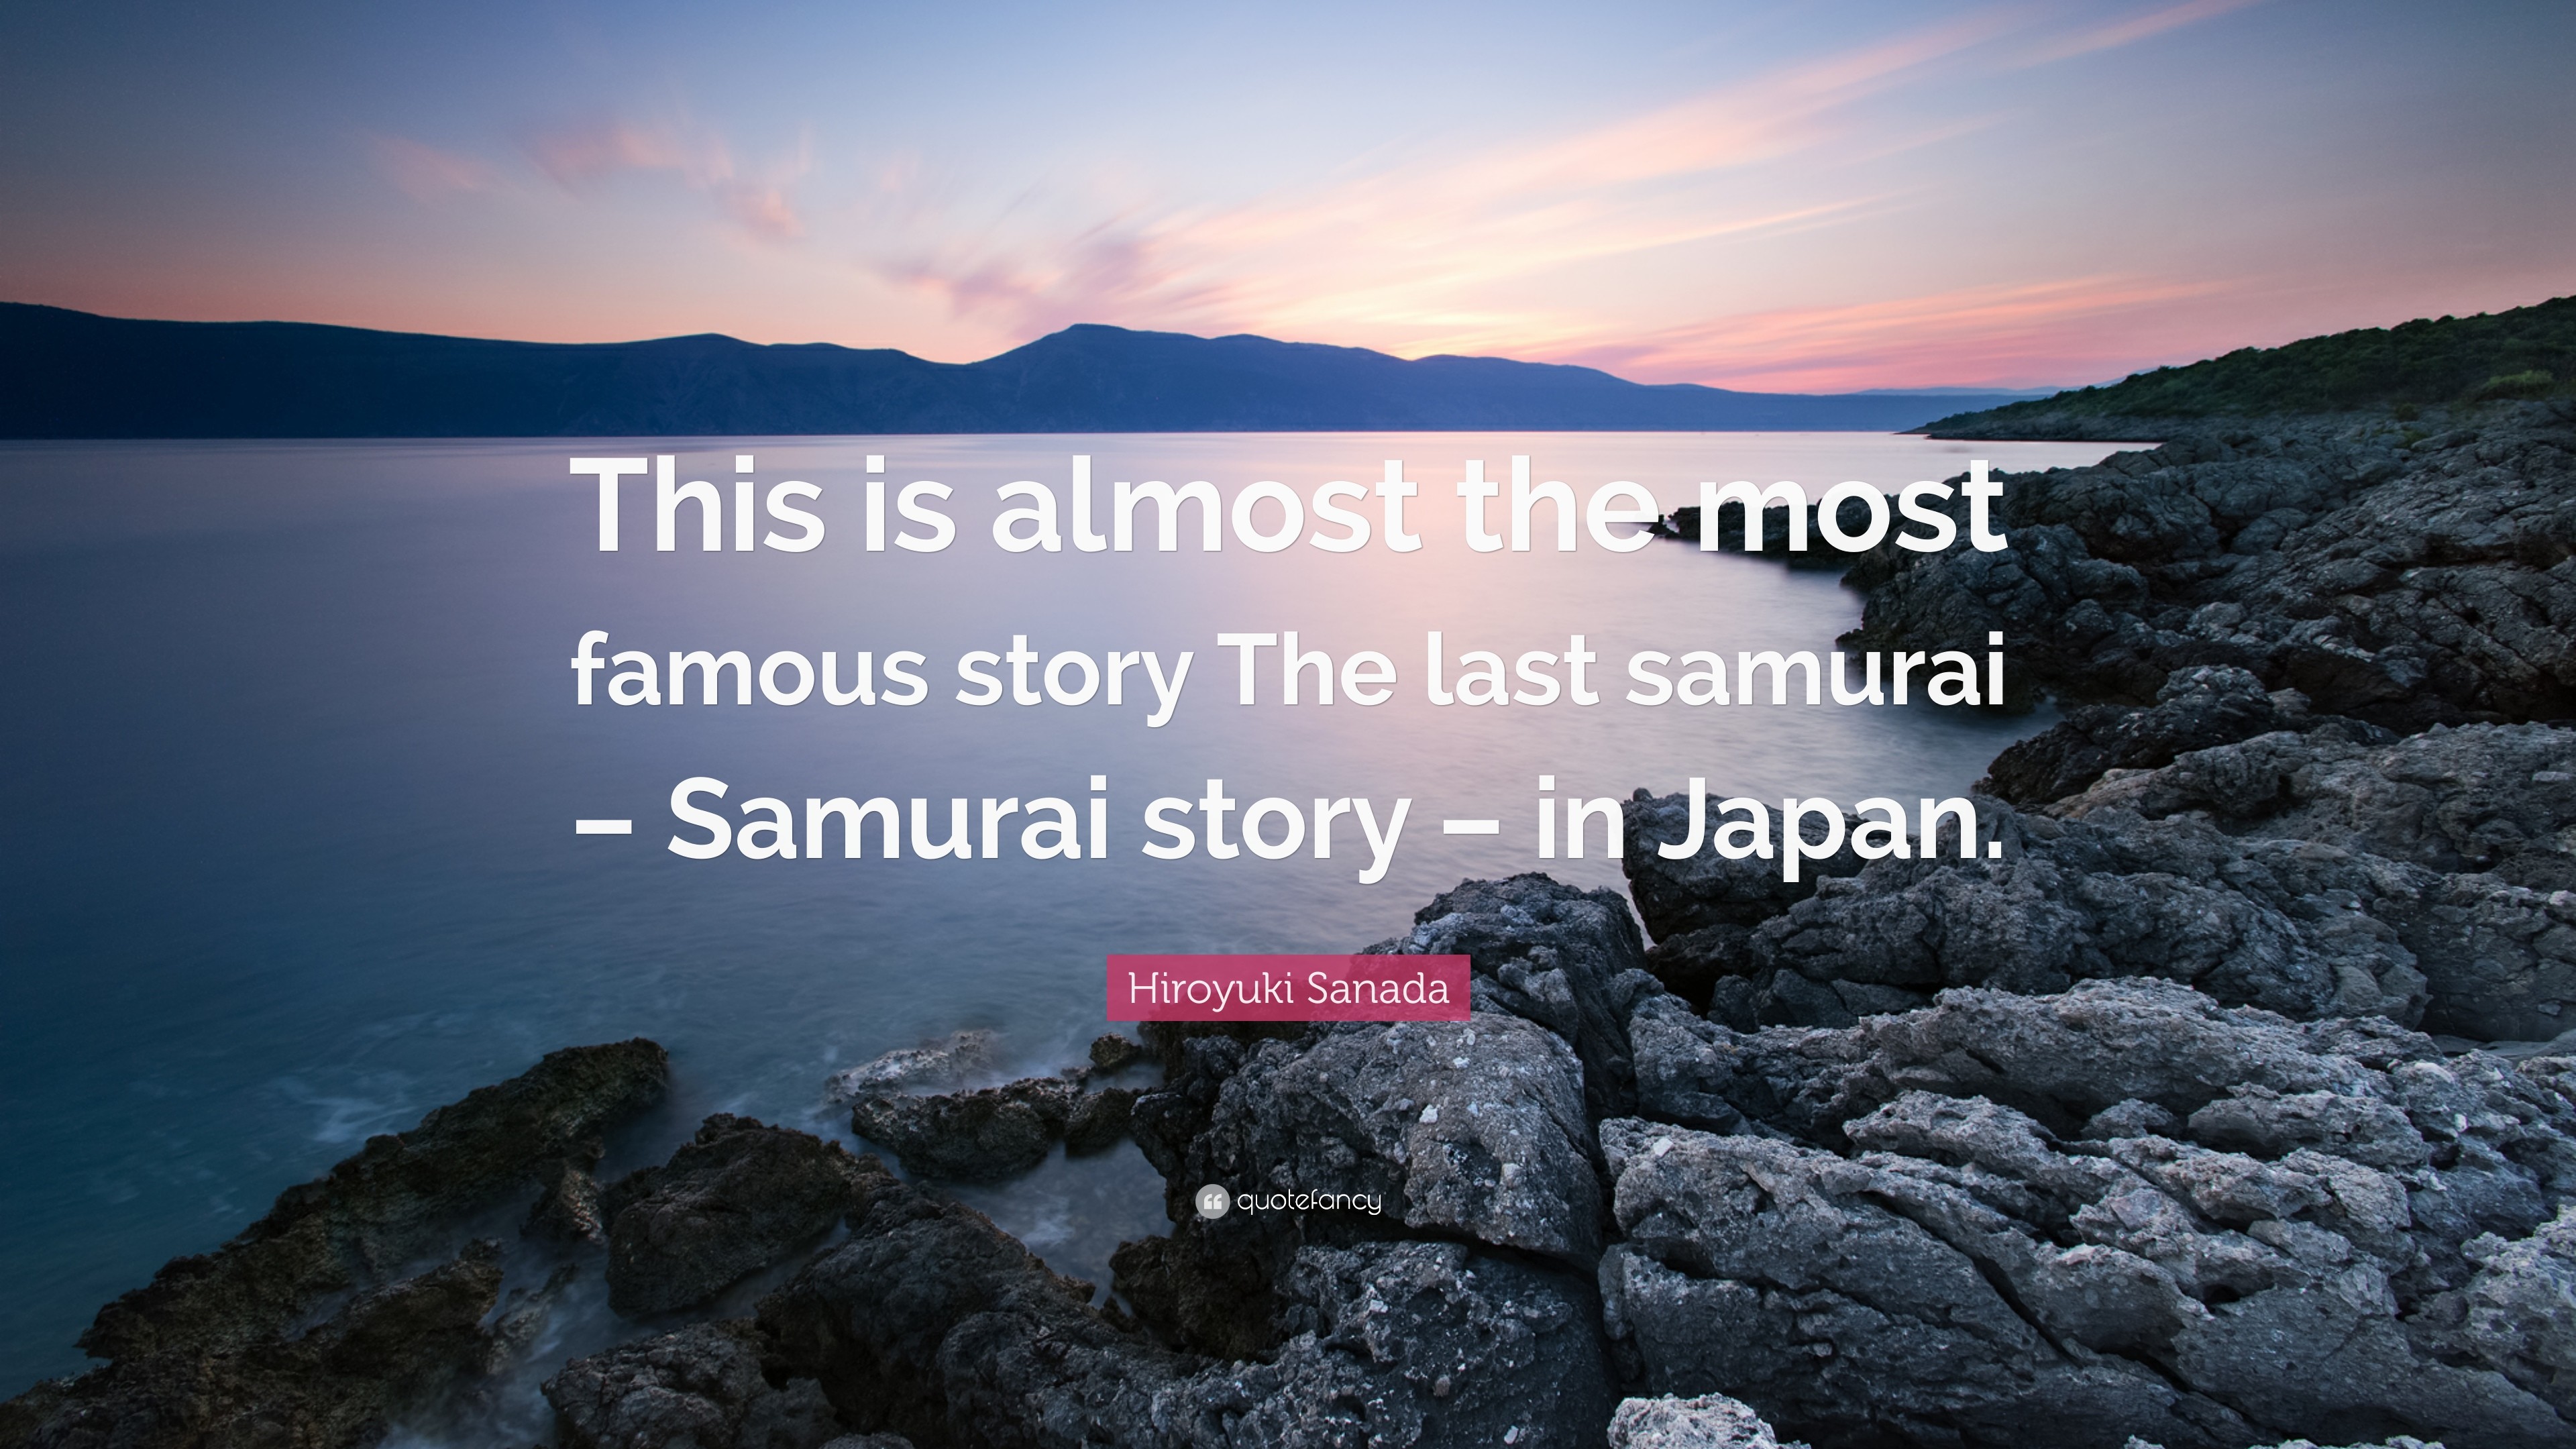 3840x2160 Hiroyuki Sanada Quote: “This is almost the most famous story The last  samurai –